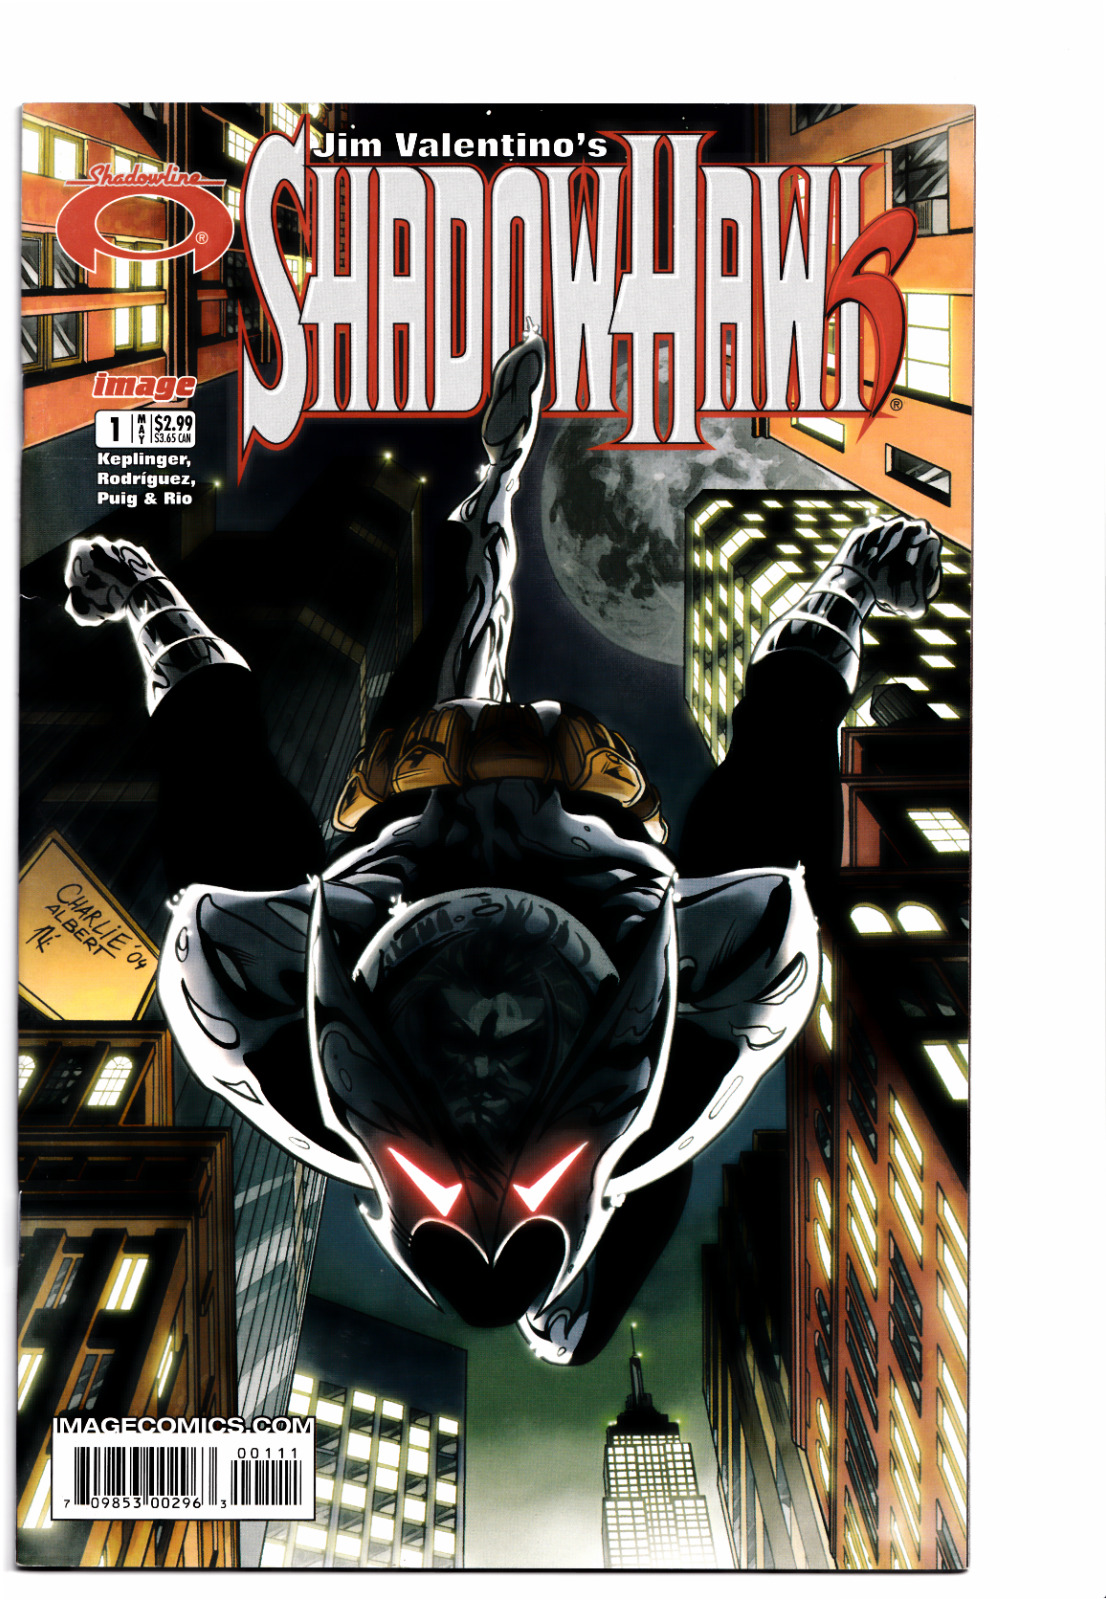 ShadowHawk (4th Series) #1; Image VeryFine/Near Mint